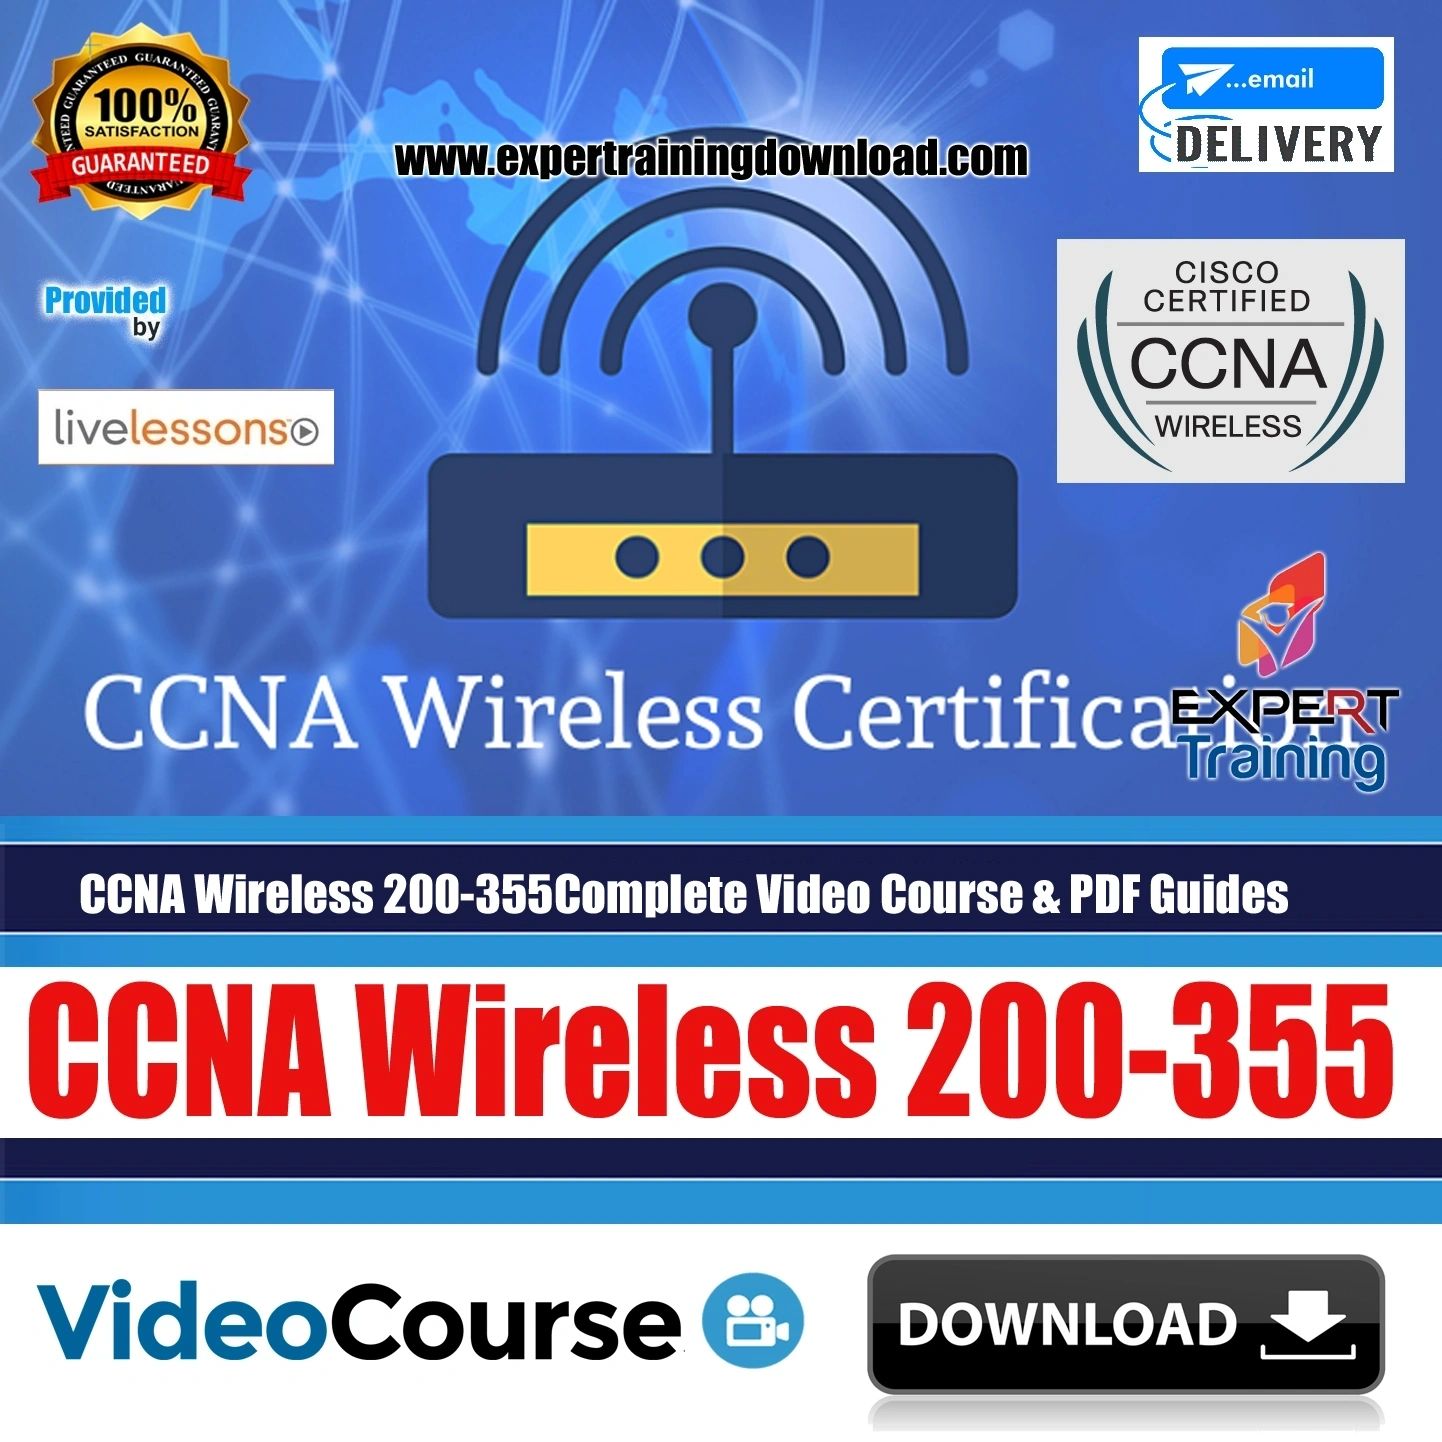 CCNA Wireless 200-355 Complete Video Course & PDF Guides